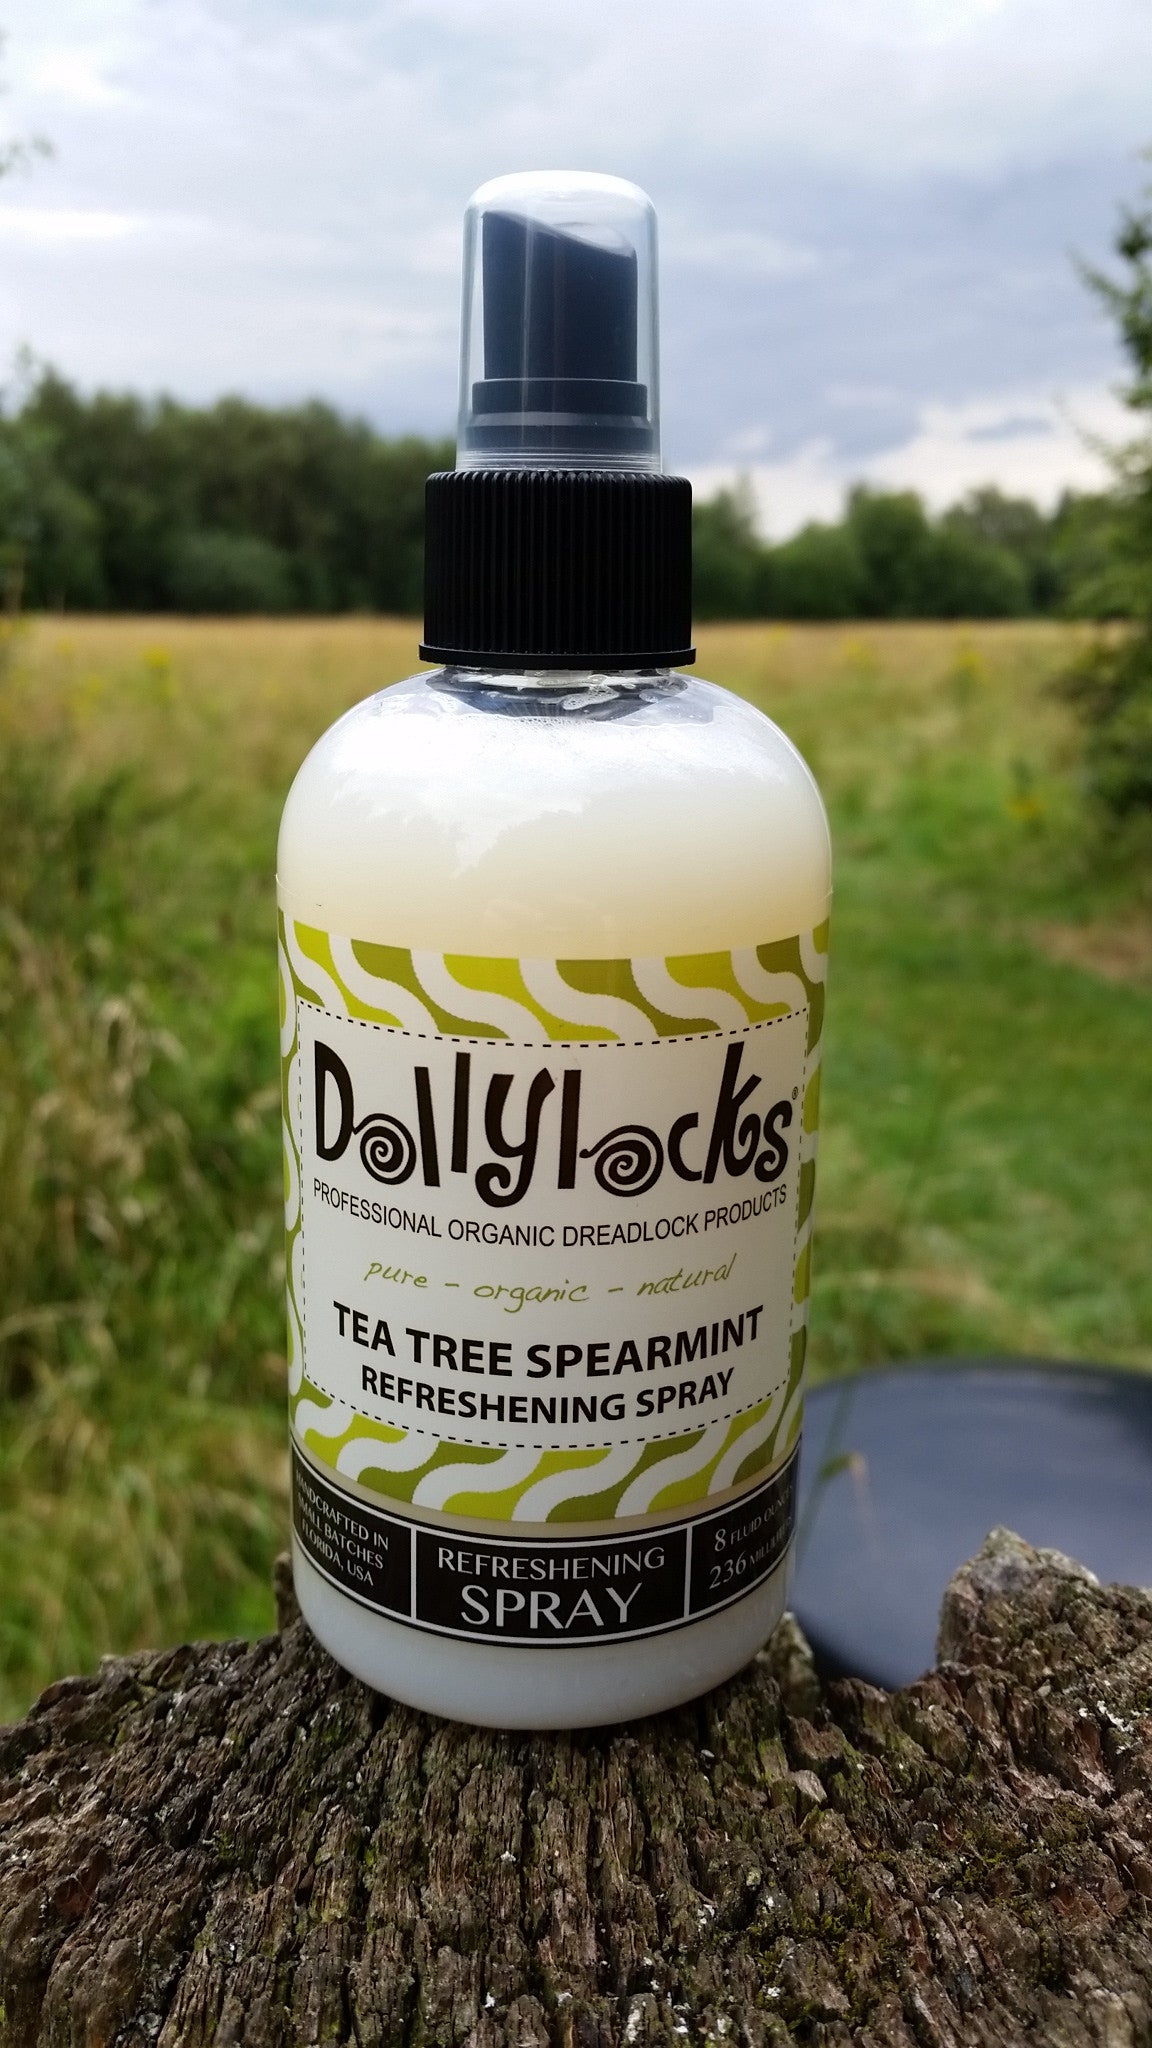 Dollylocks Tea Tree Spearmint Refreshening Spray